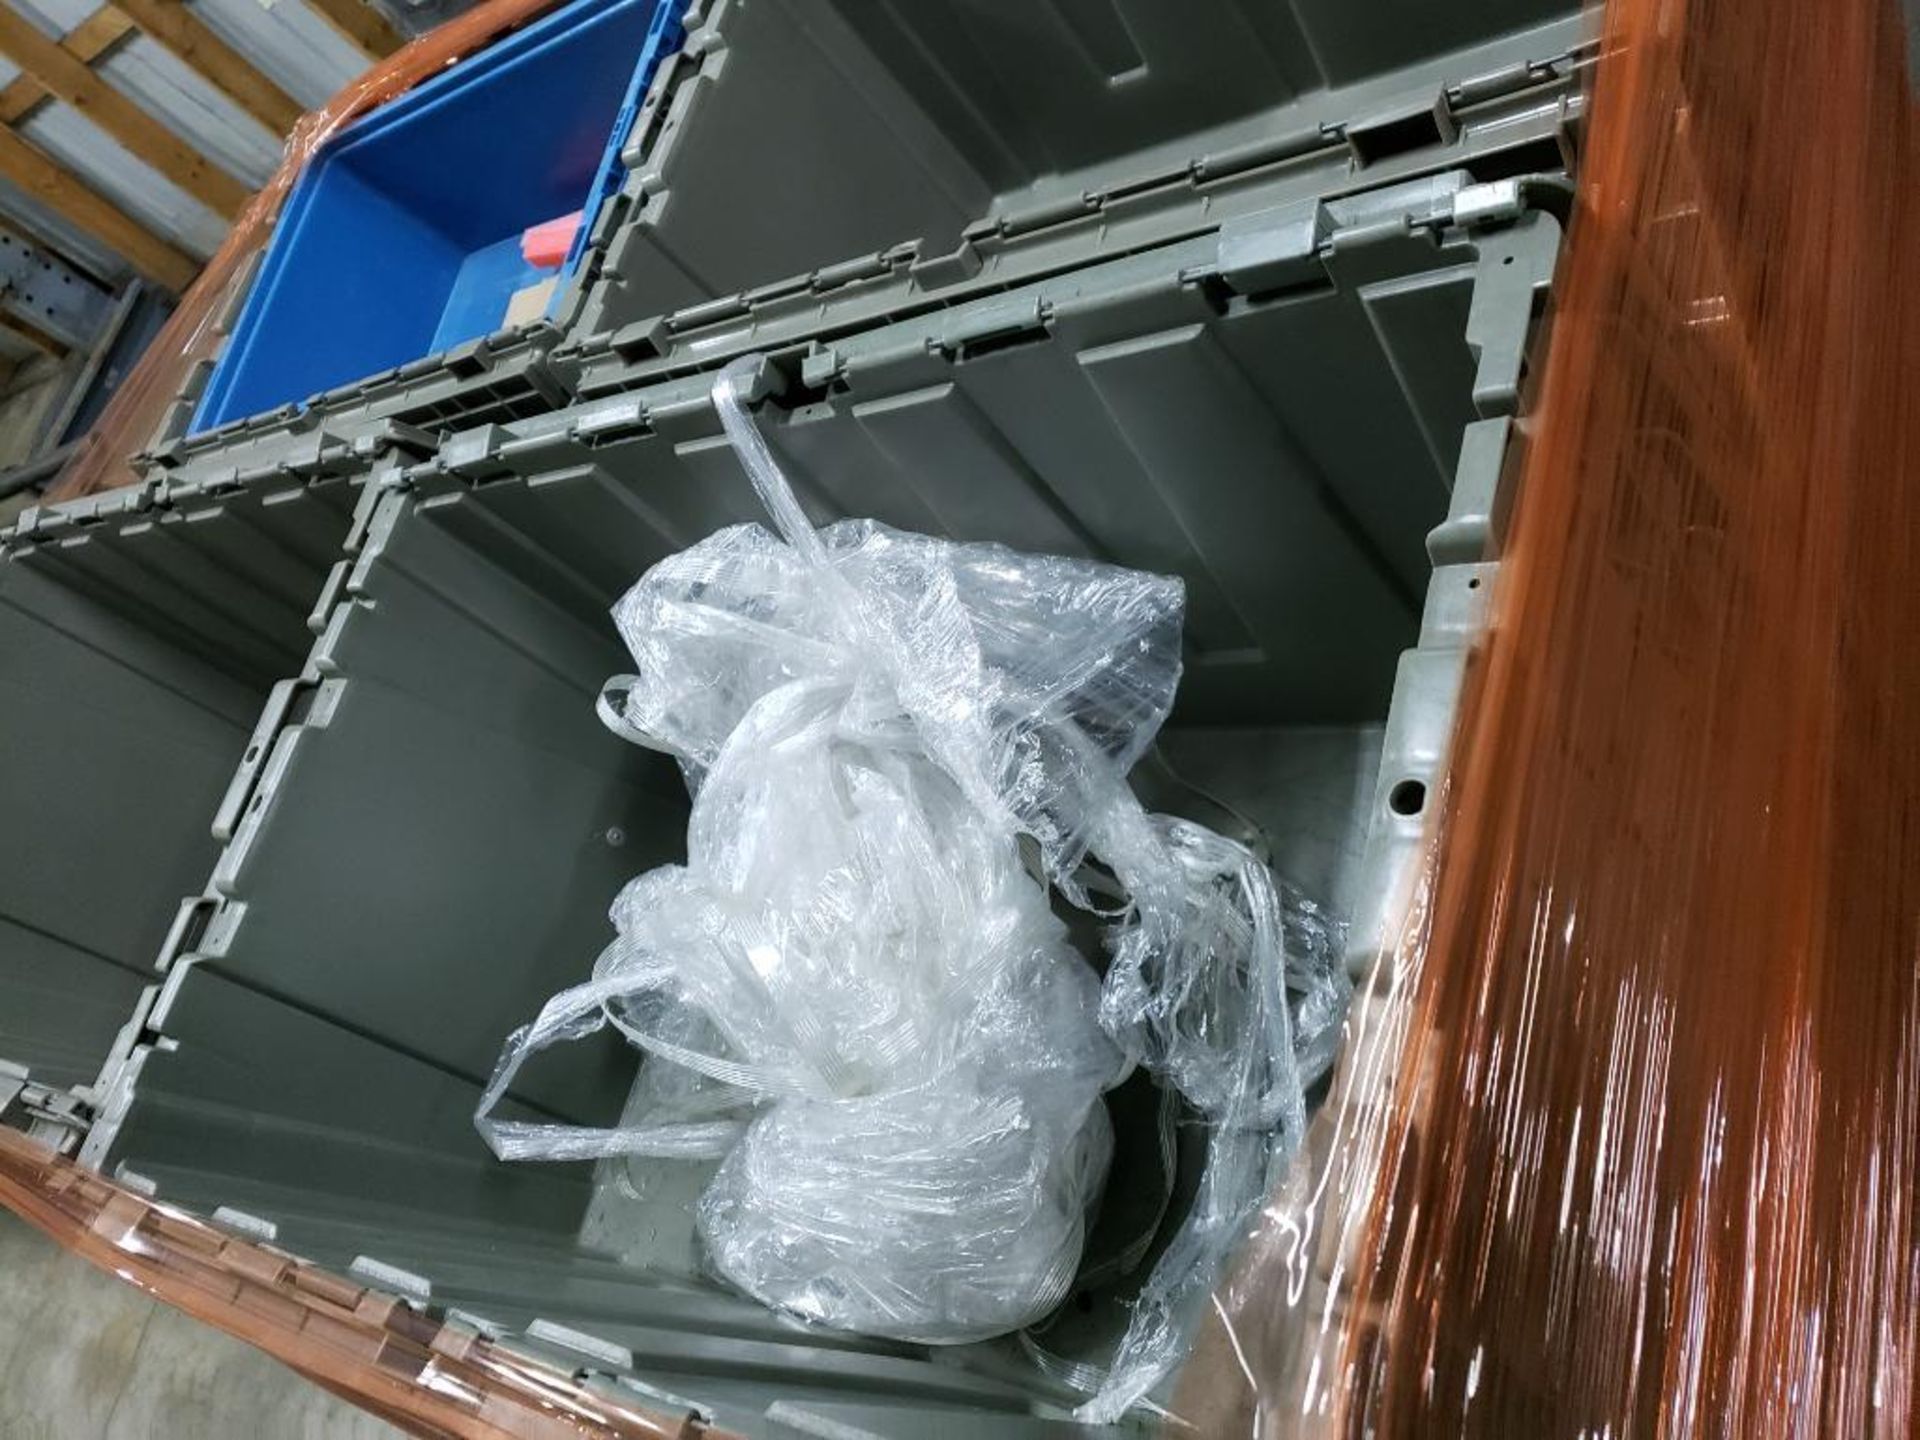 Qty 50 - Plastic storage bins. - Image 2 of 2